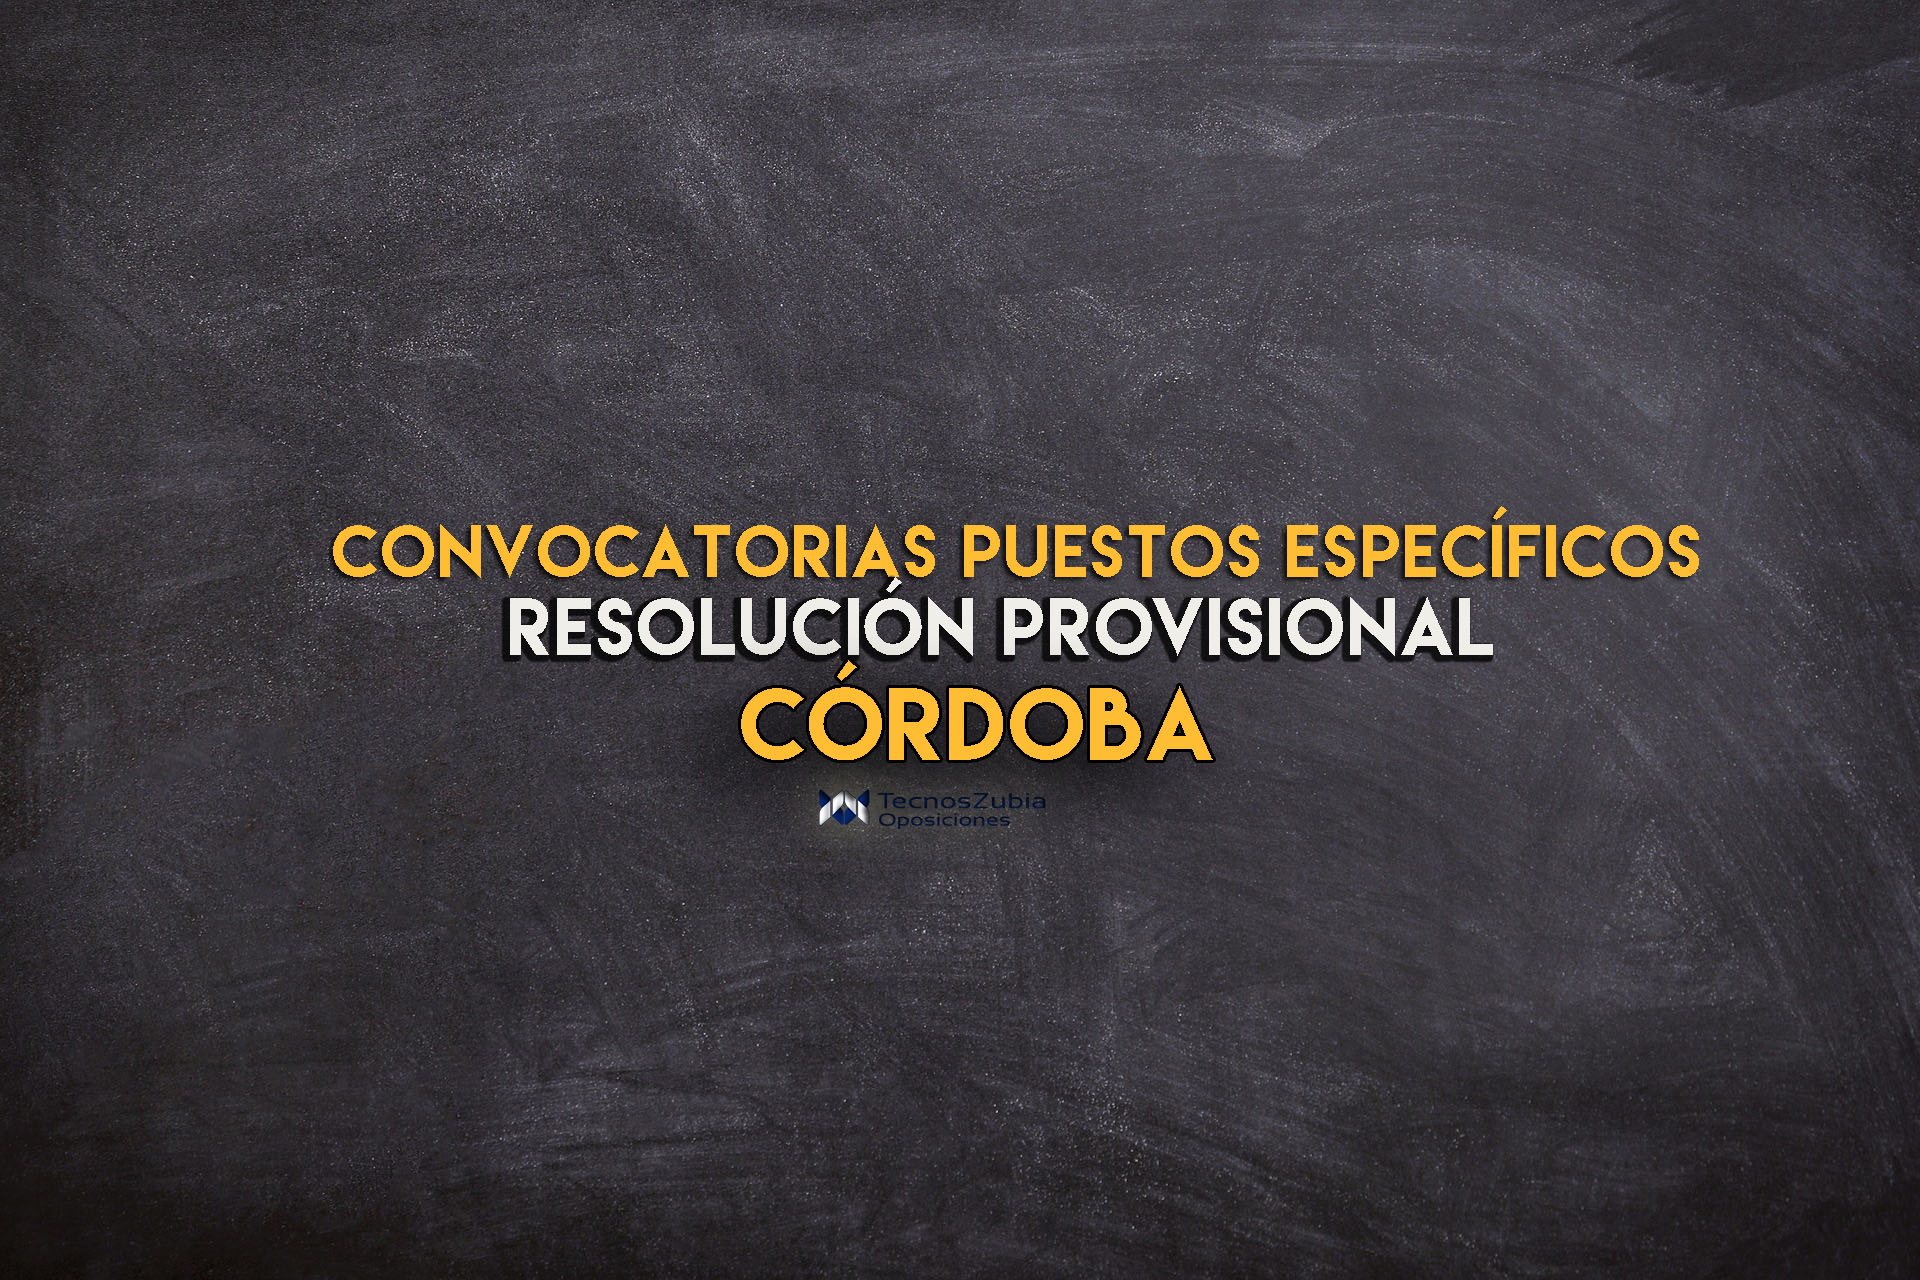 resolucion provisional córdoba